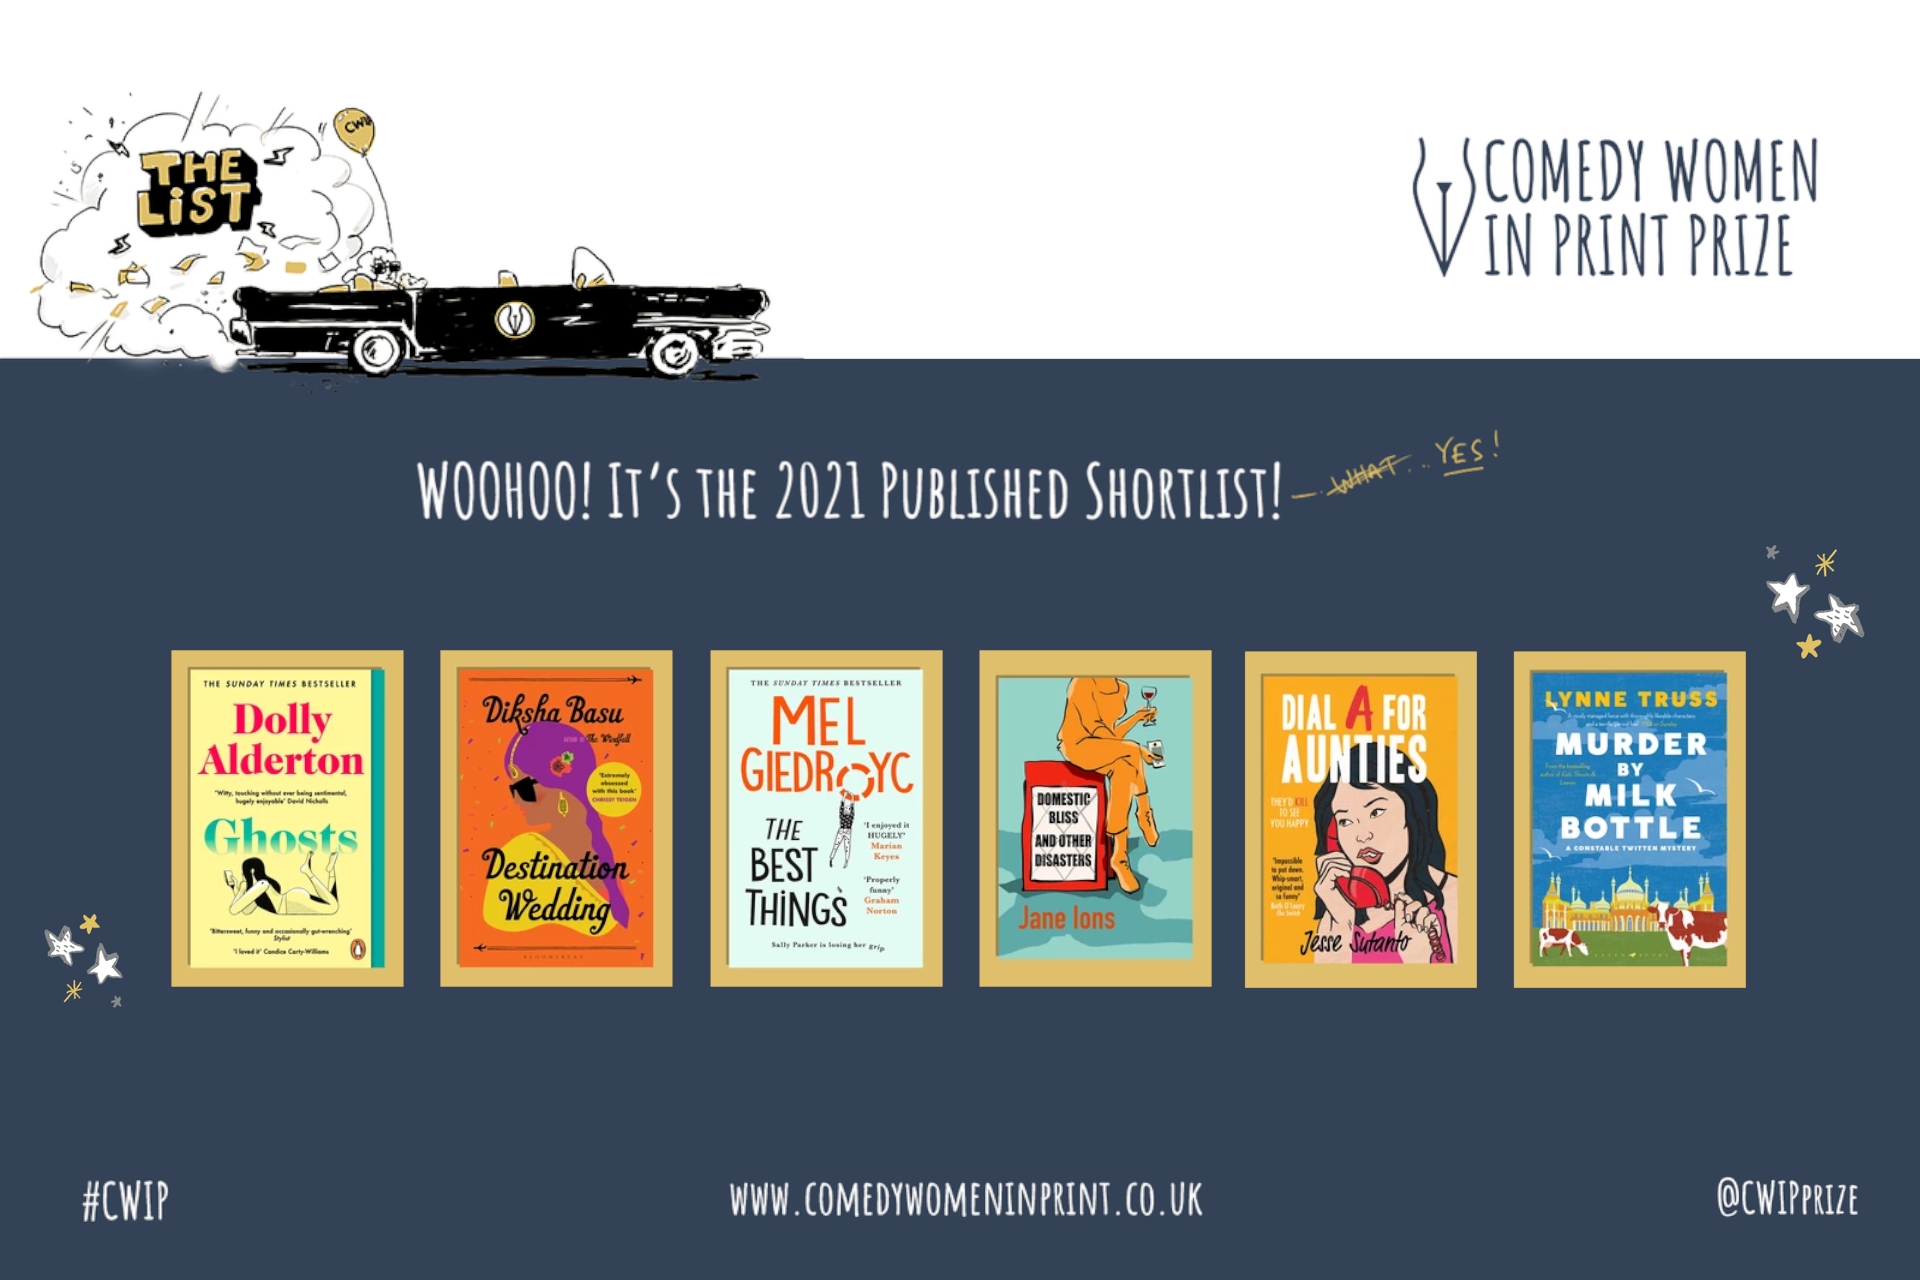 CWIP (Comedy Women in Print) Prize Announces 2021 Shortlist